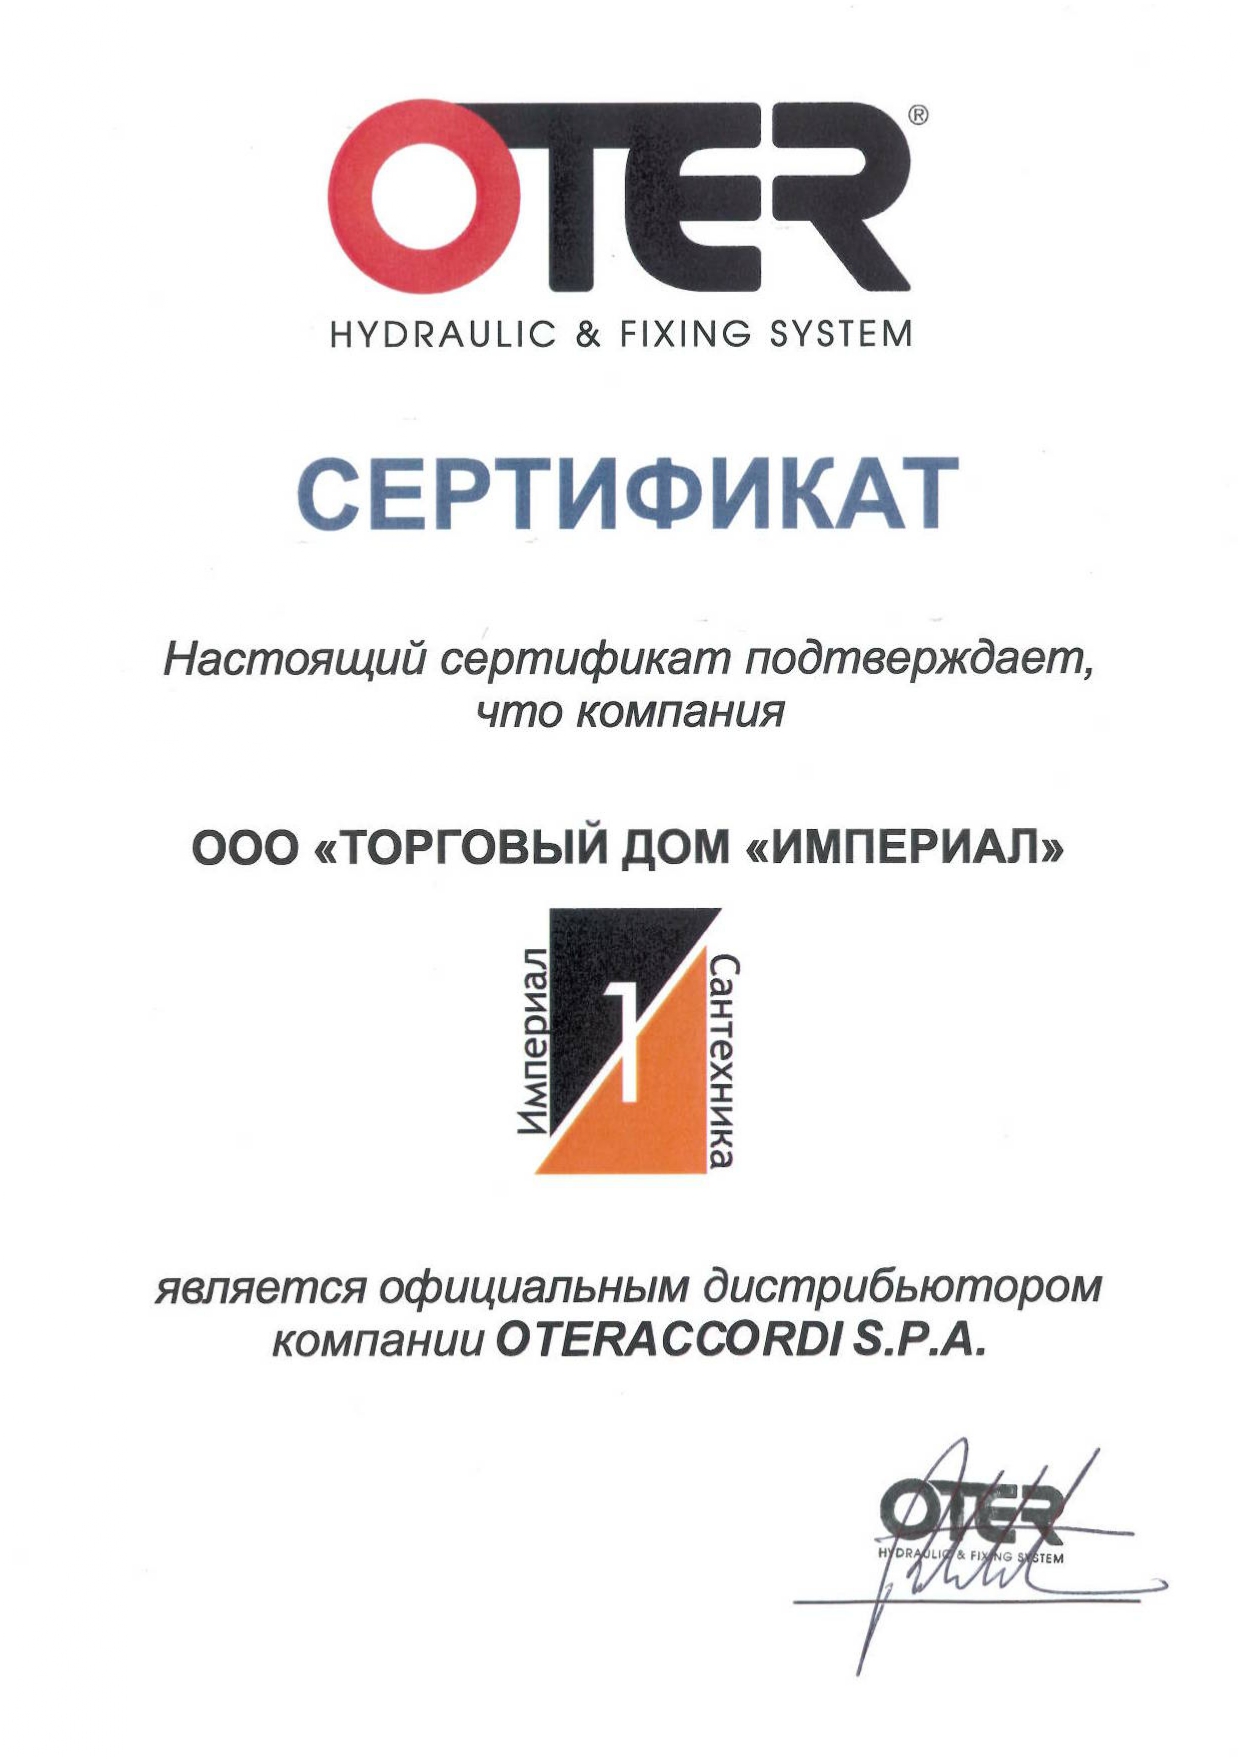 Сертификат официального дистрибьютора OTER.jpg